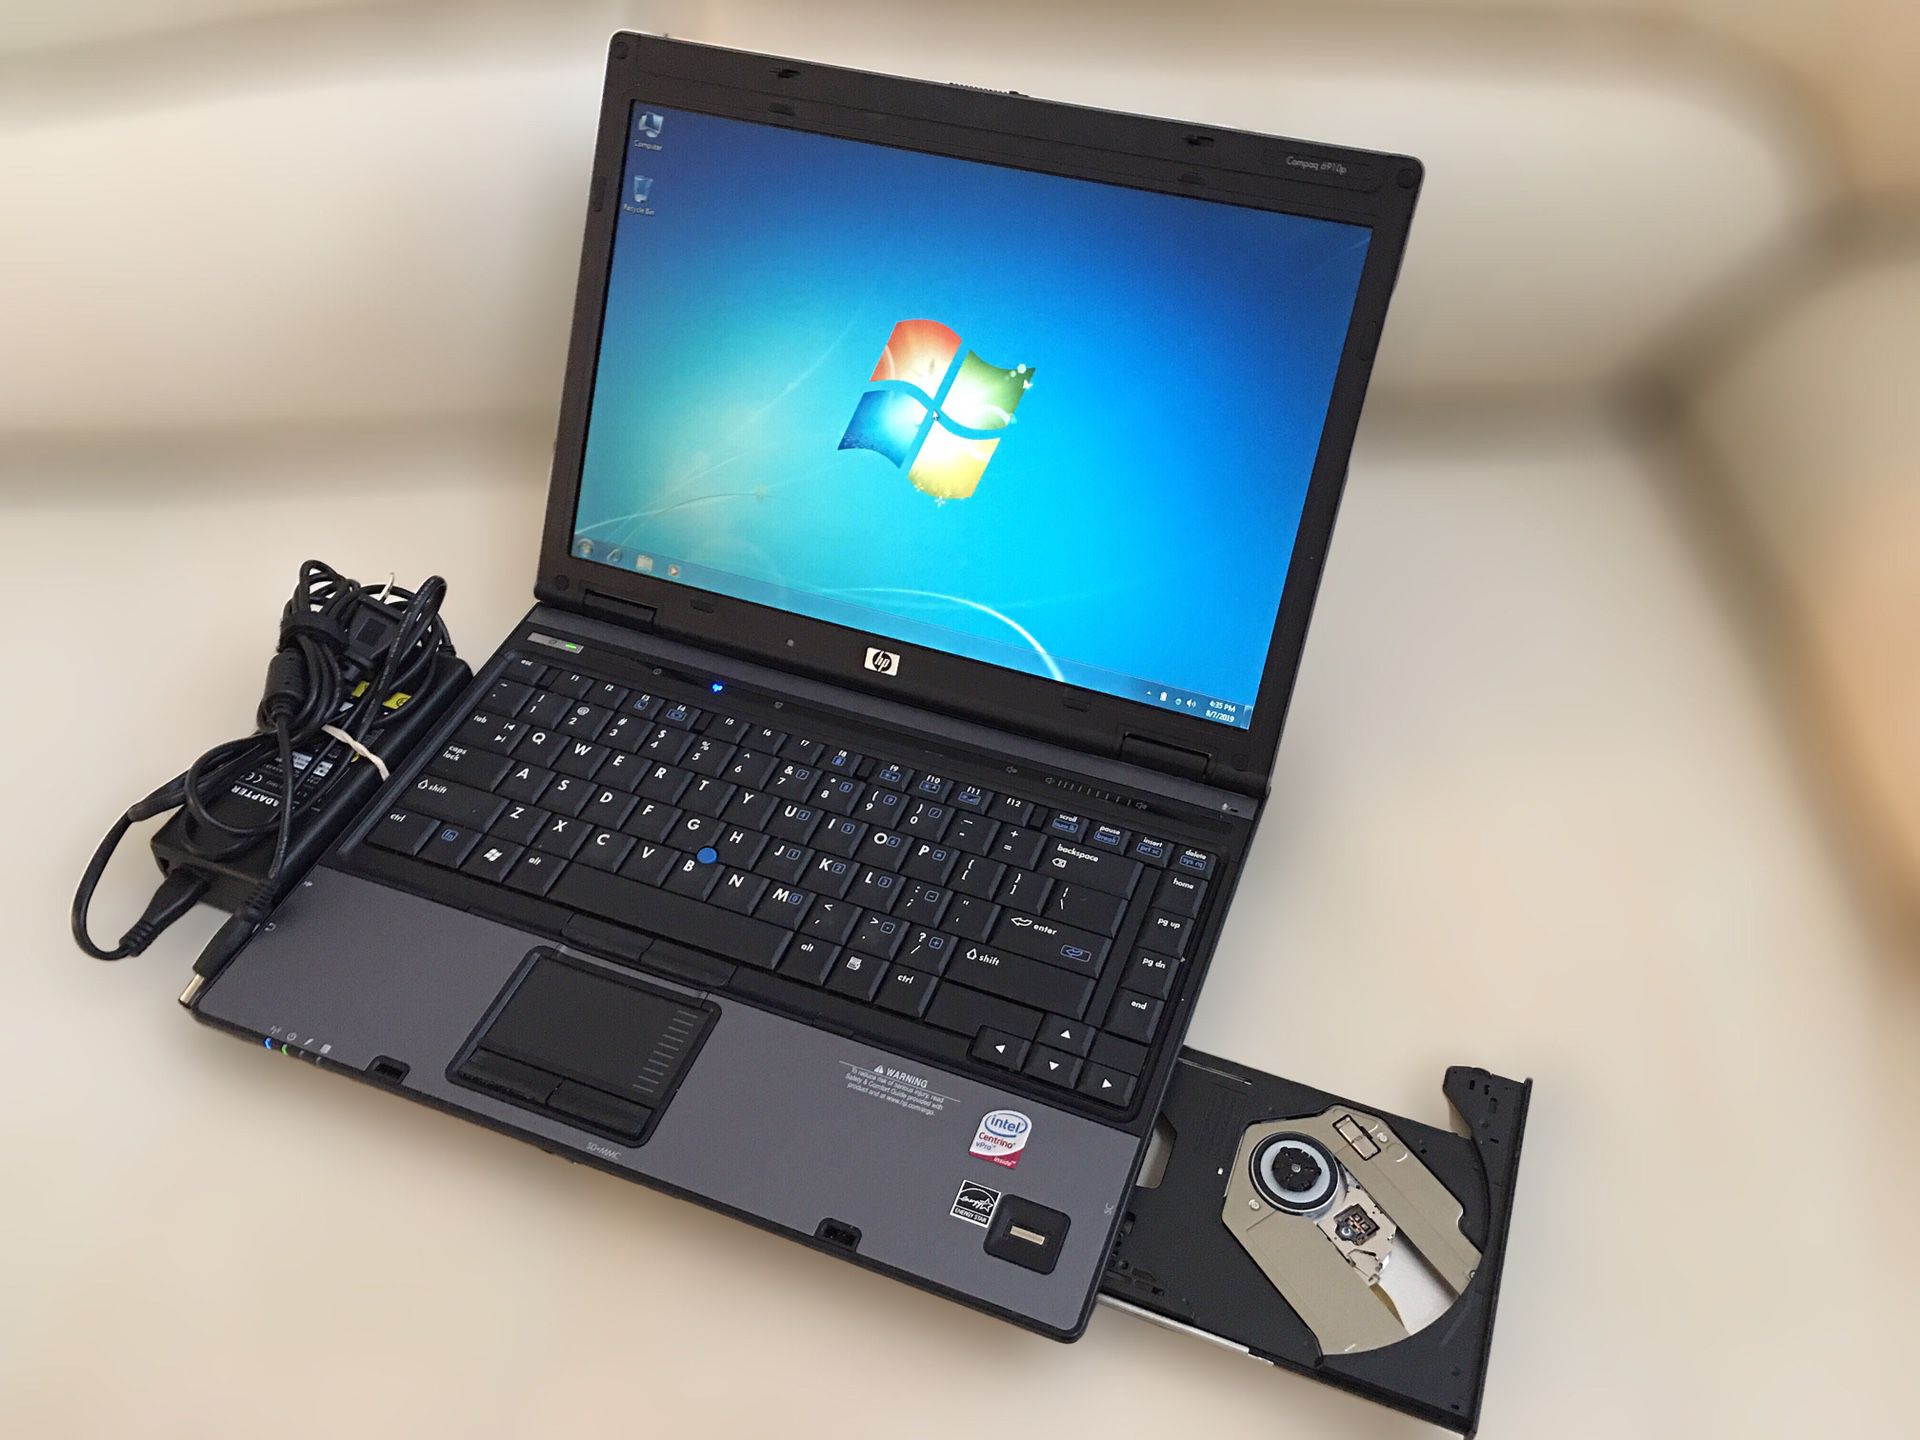 HP laptop / Windows 7 / Antivirus / Charger